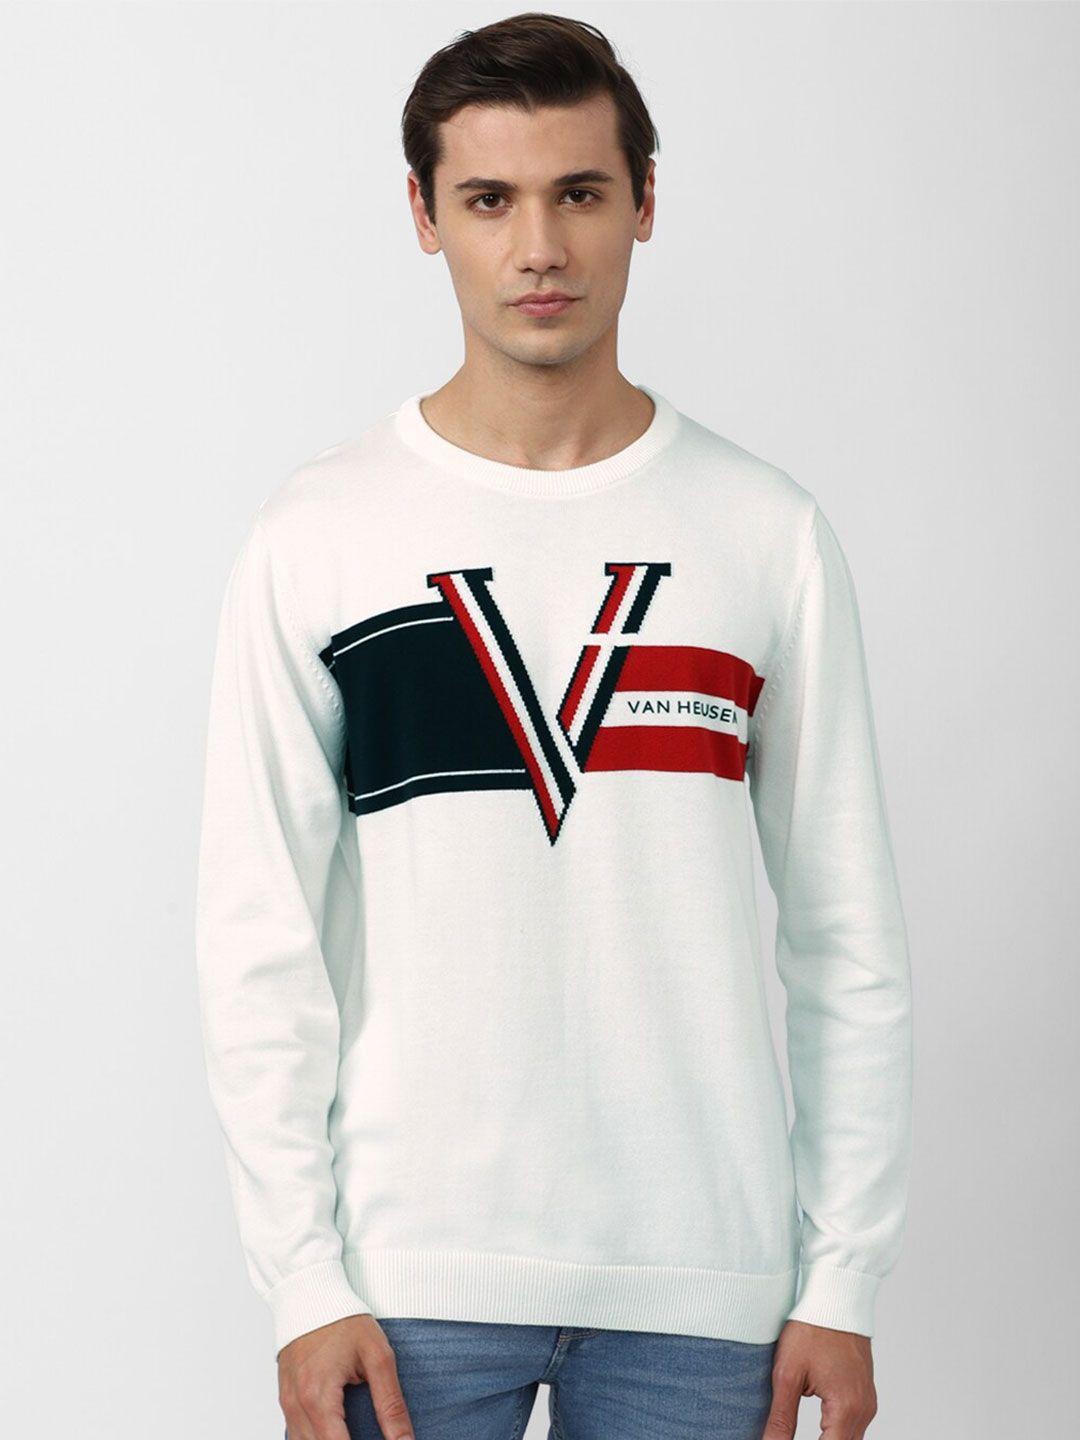 van-heusen-sport-men-white-&-black-typography-printed-cotton-pullover